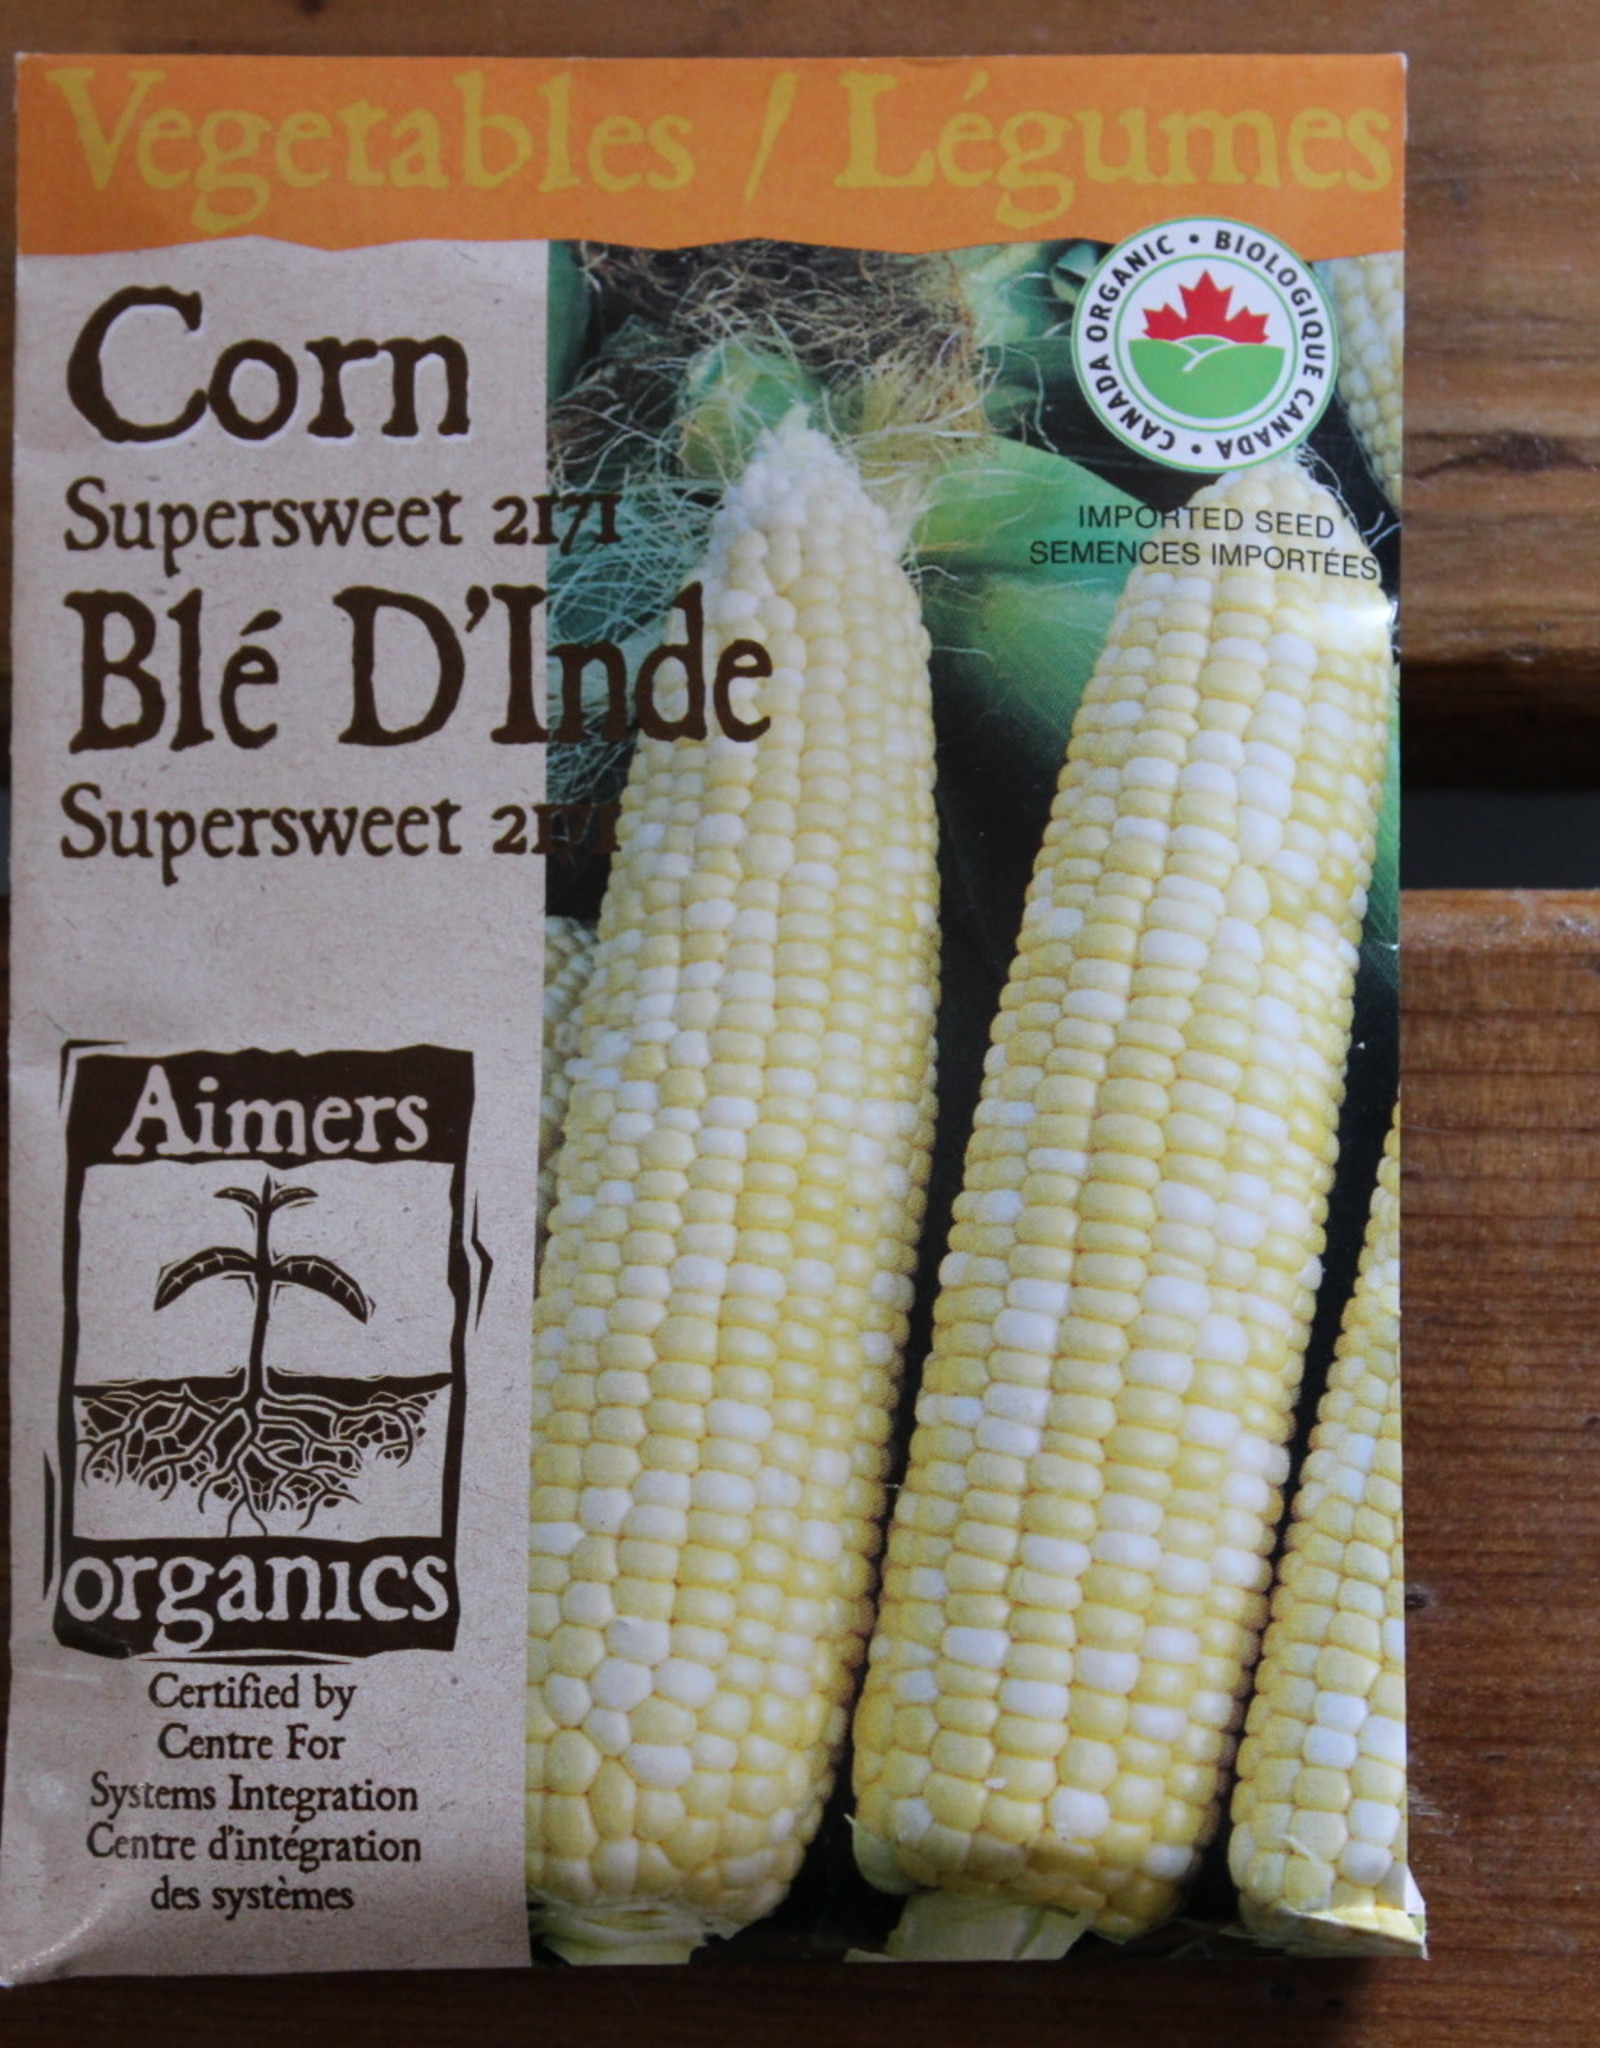 Aimers Corn - Supersweet 2171